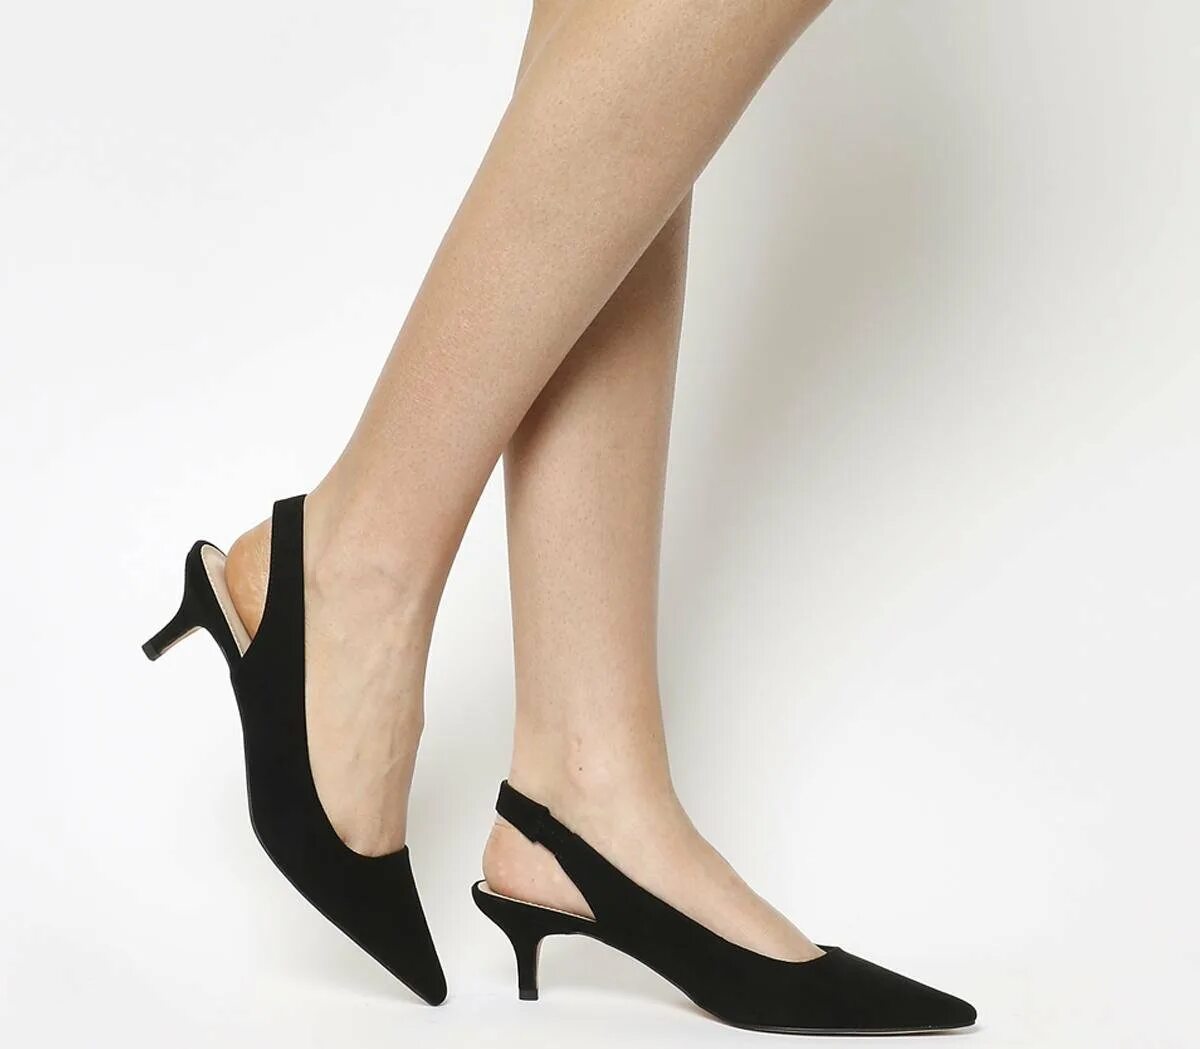 Каблук киттен хиллс. Туфли Киттен Хилл. Туфли на каблуке Киттен Хиллс. Обувь с каблуком Киттен Хилл. Slingback Kitten Heel Shoes Black.